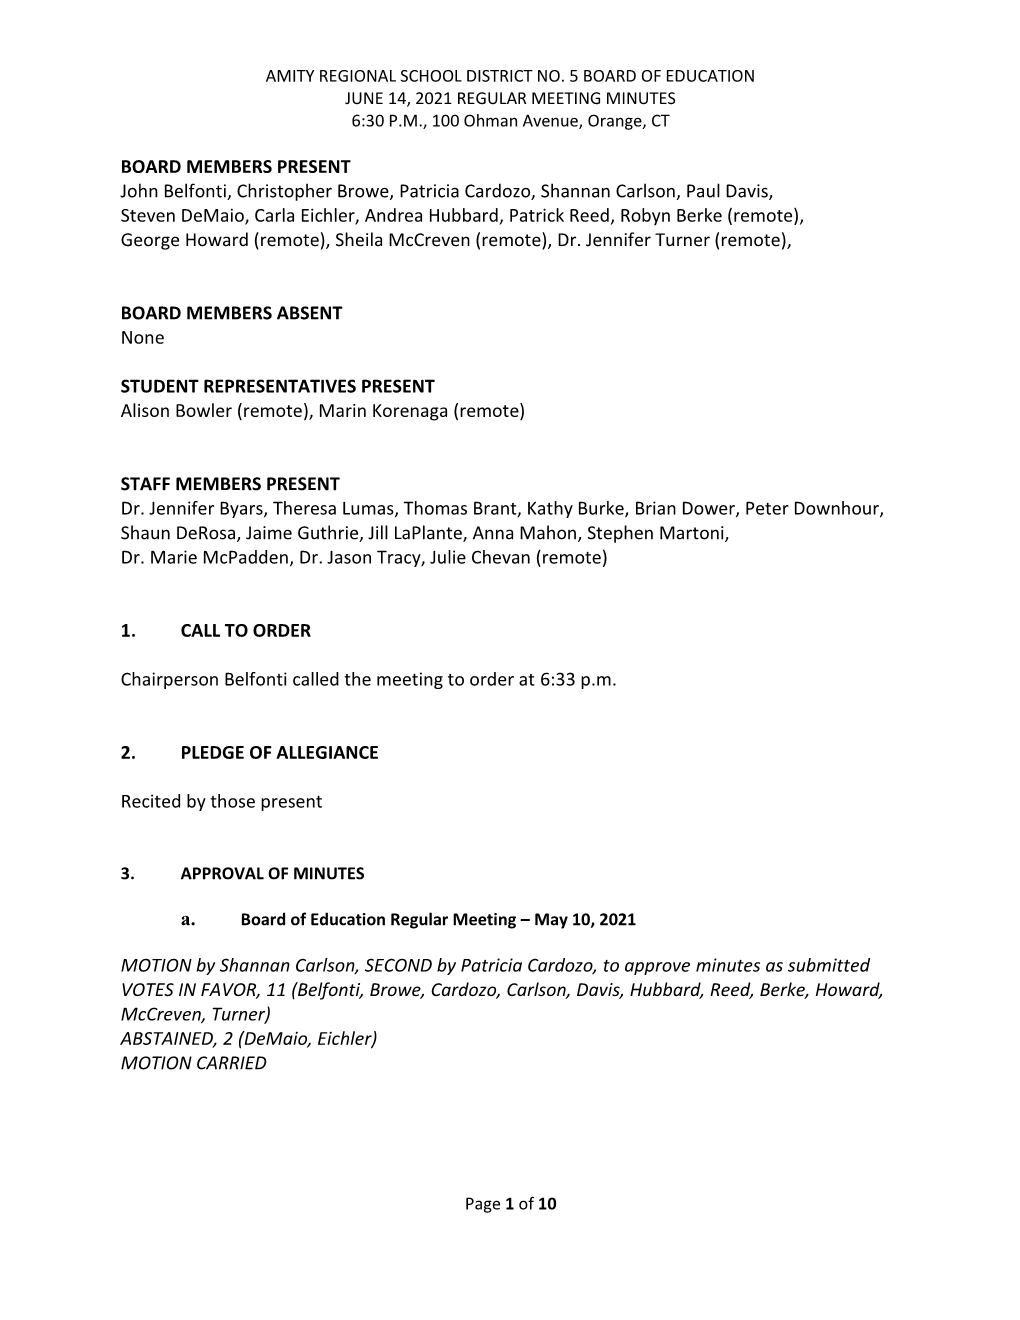 BOE Regular Meeting Minutes 2021-06-14